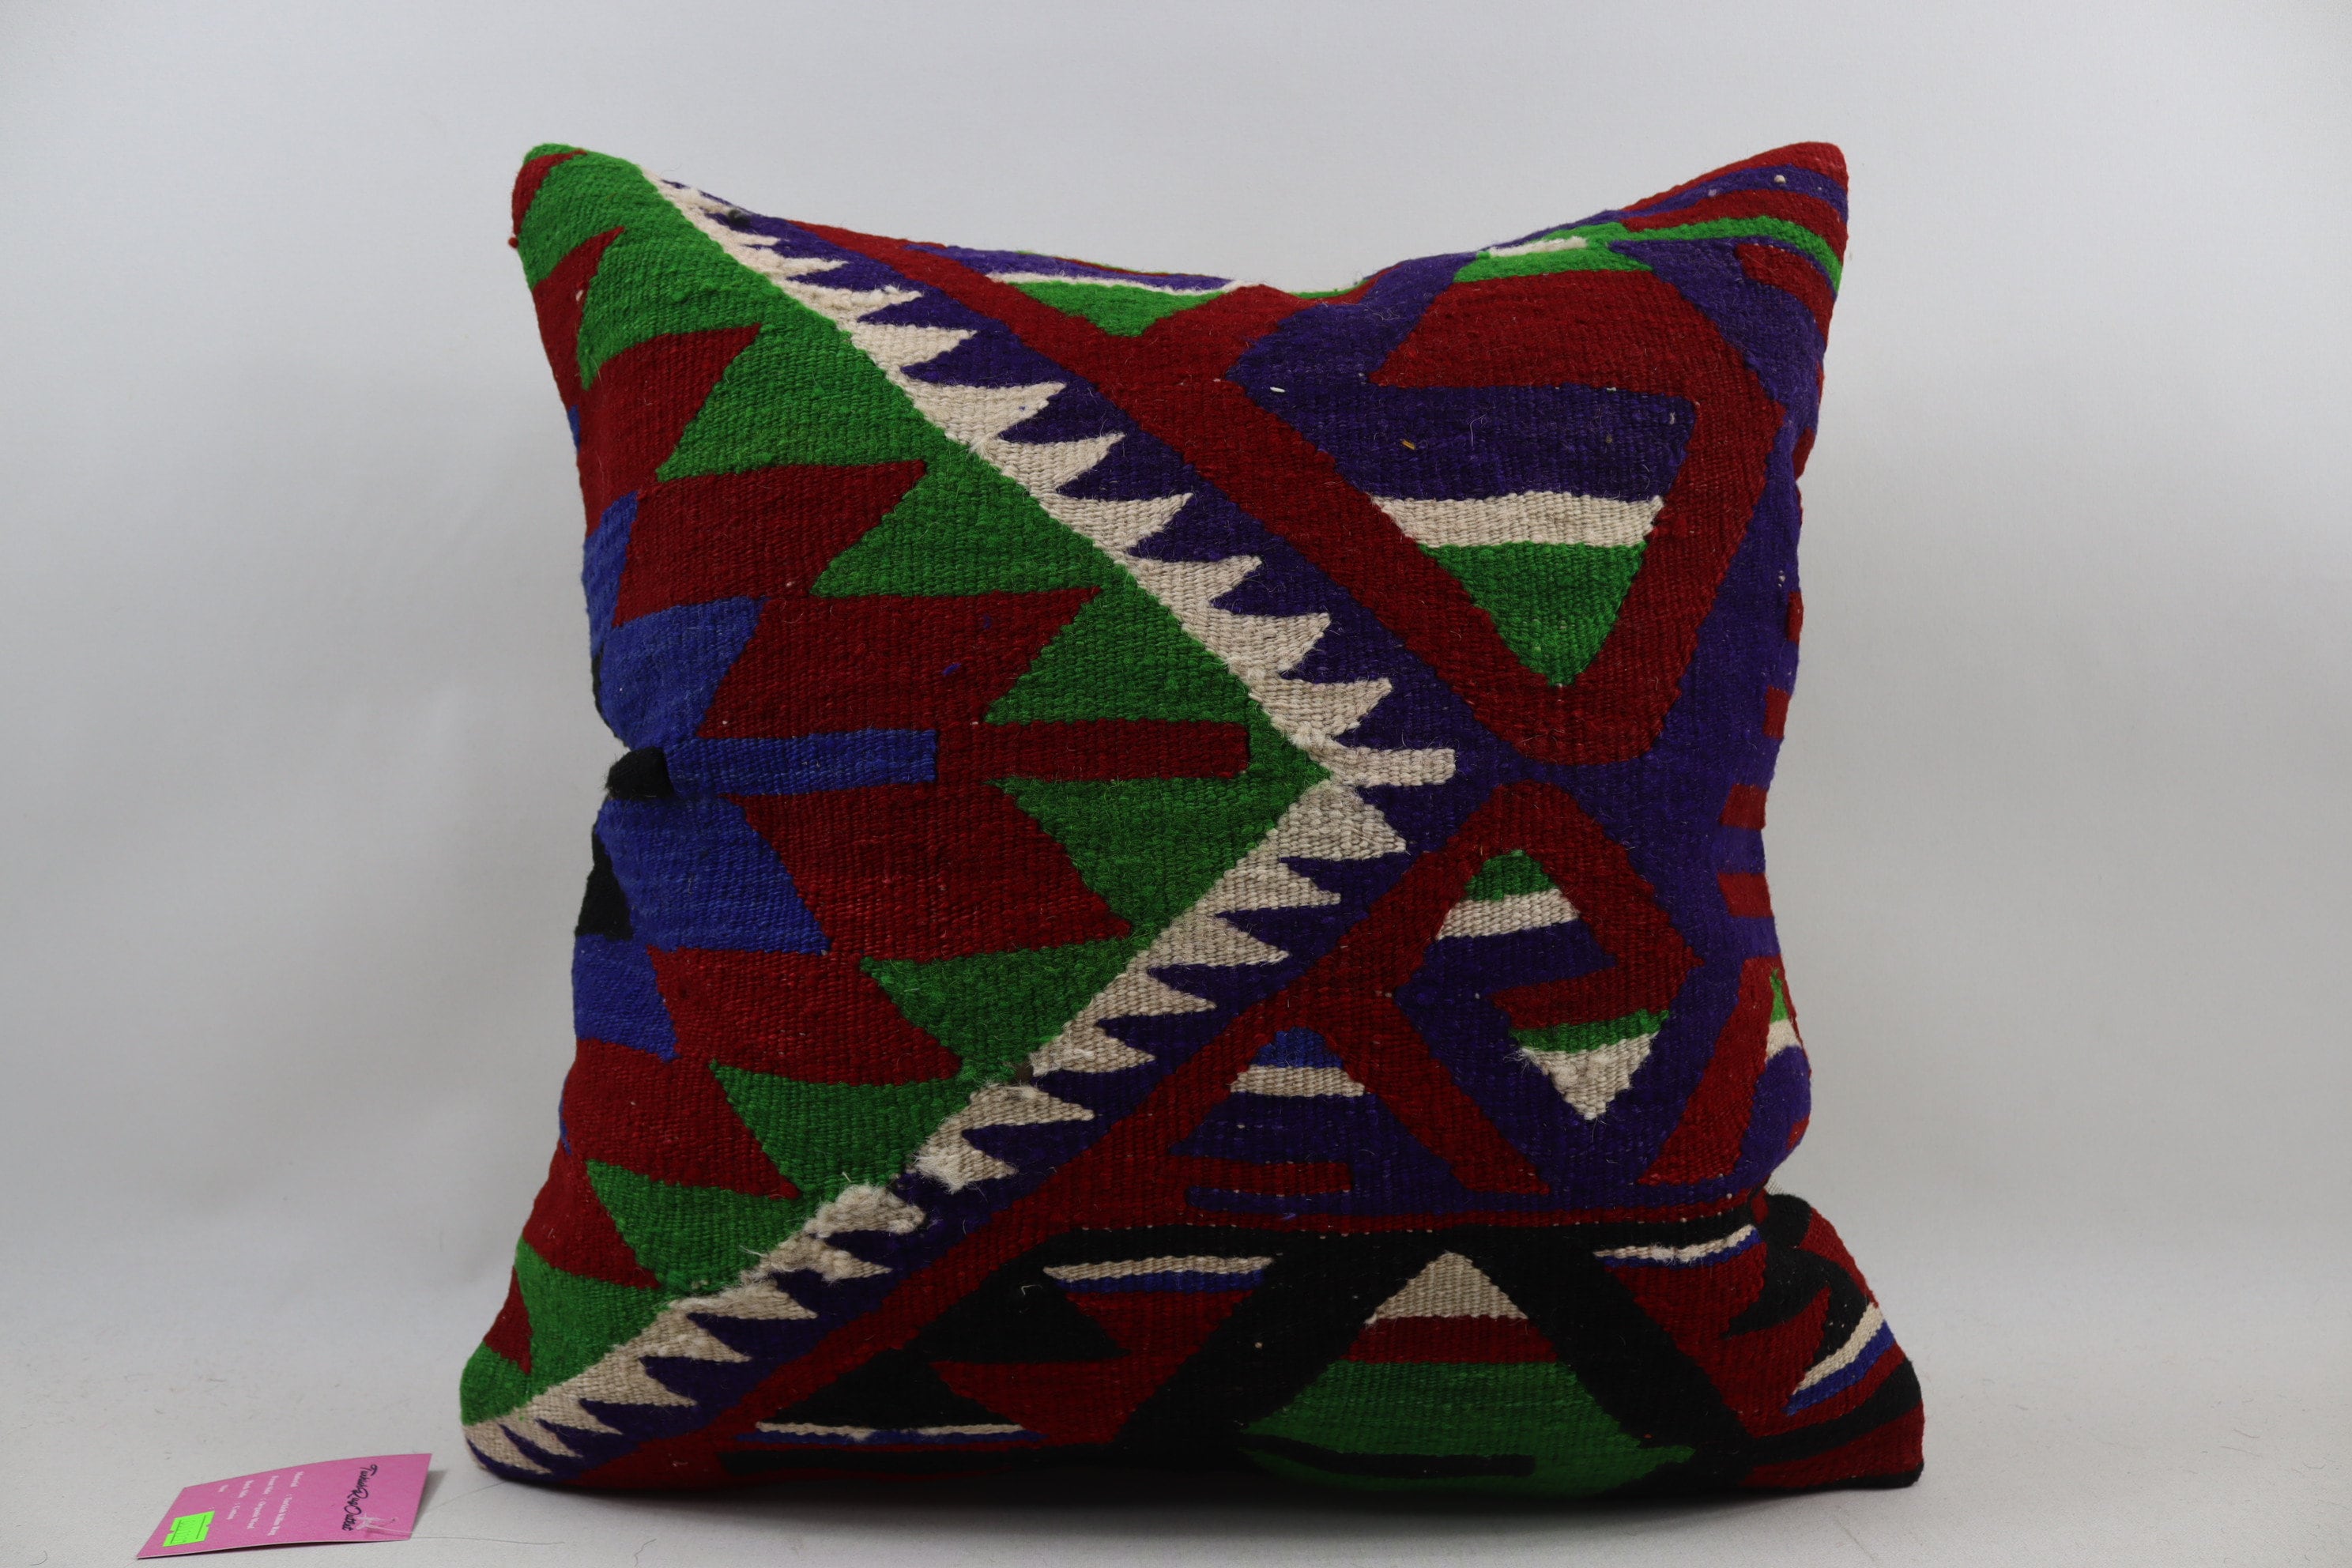 anatolian kilim pillow bedding pillow decorative lumbar pillow aztec kilim pillow nomadic kilim pillow 12x20 inches pillow cover code 313